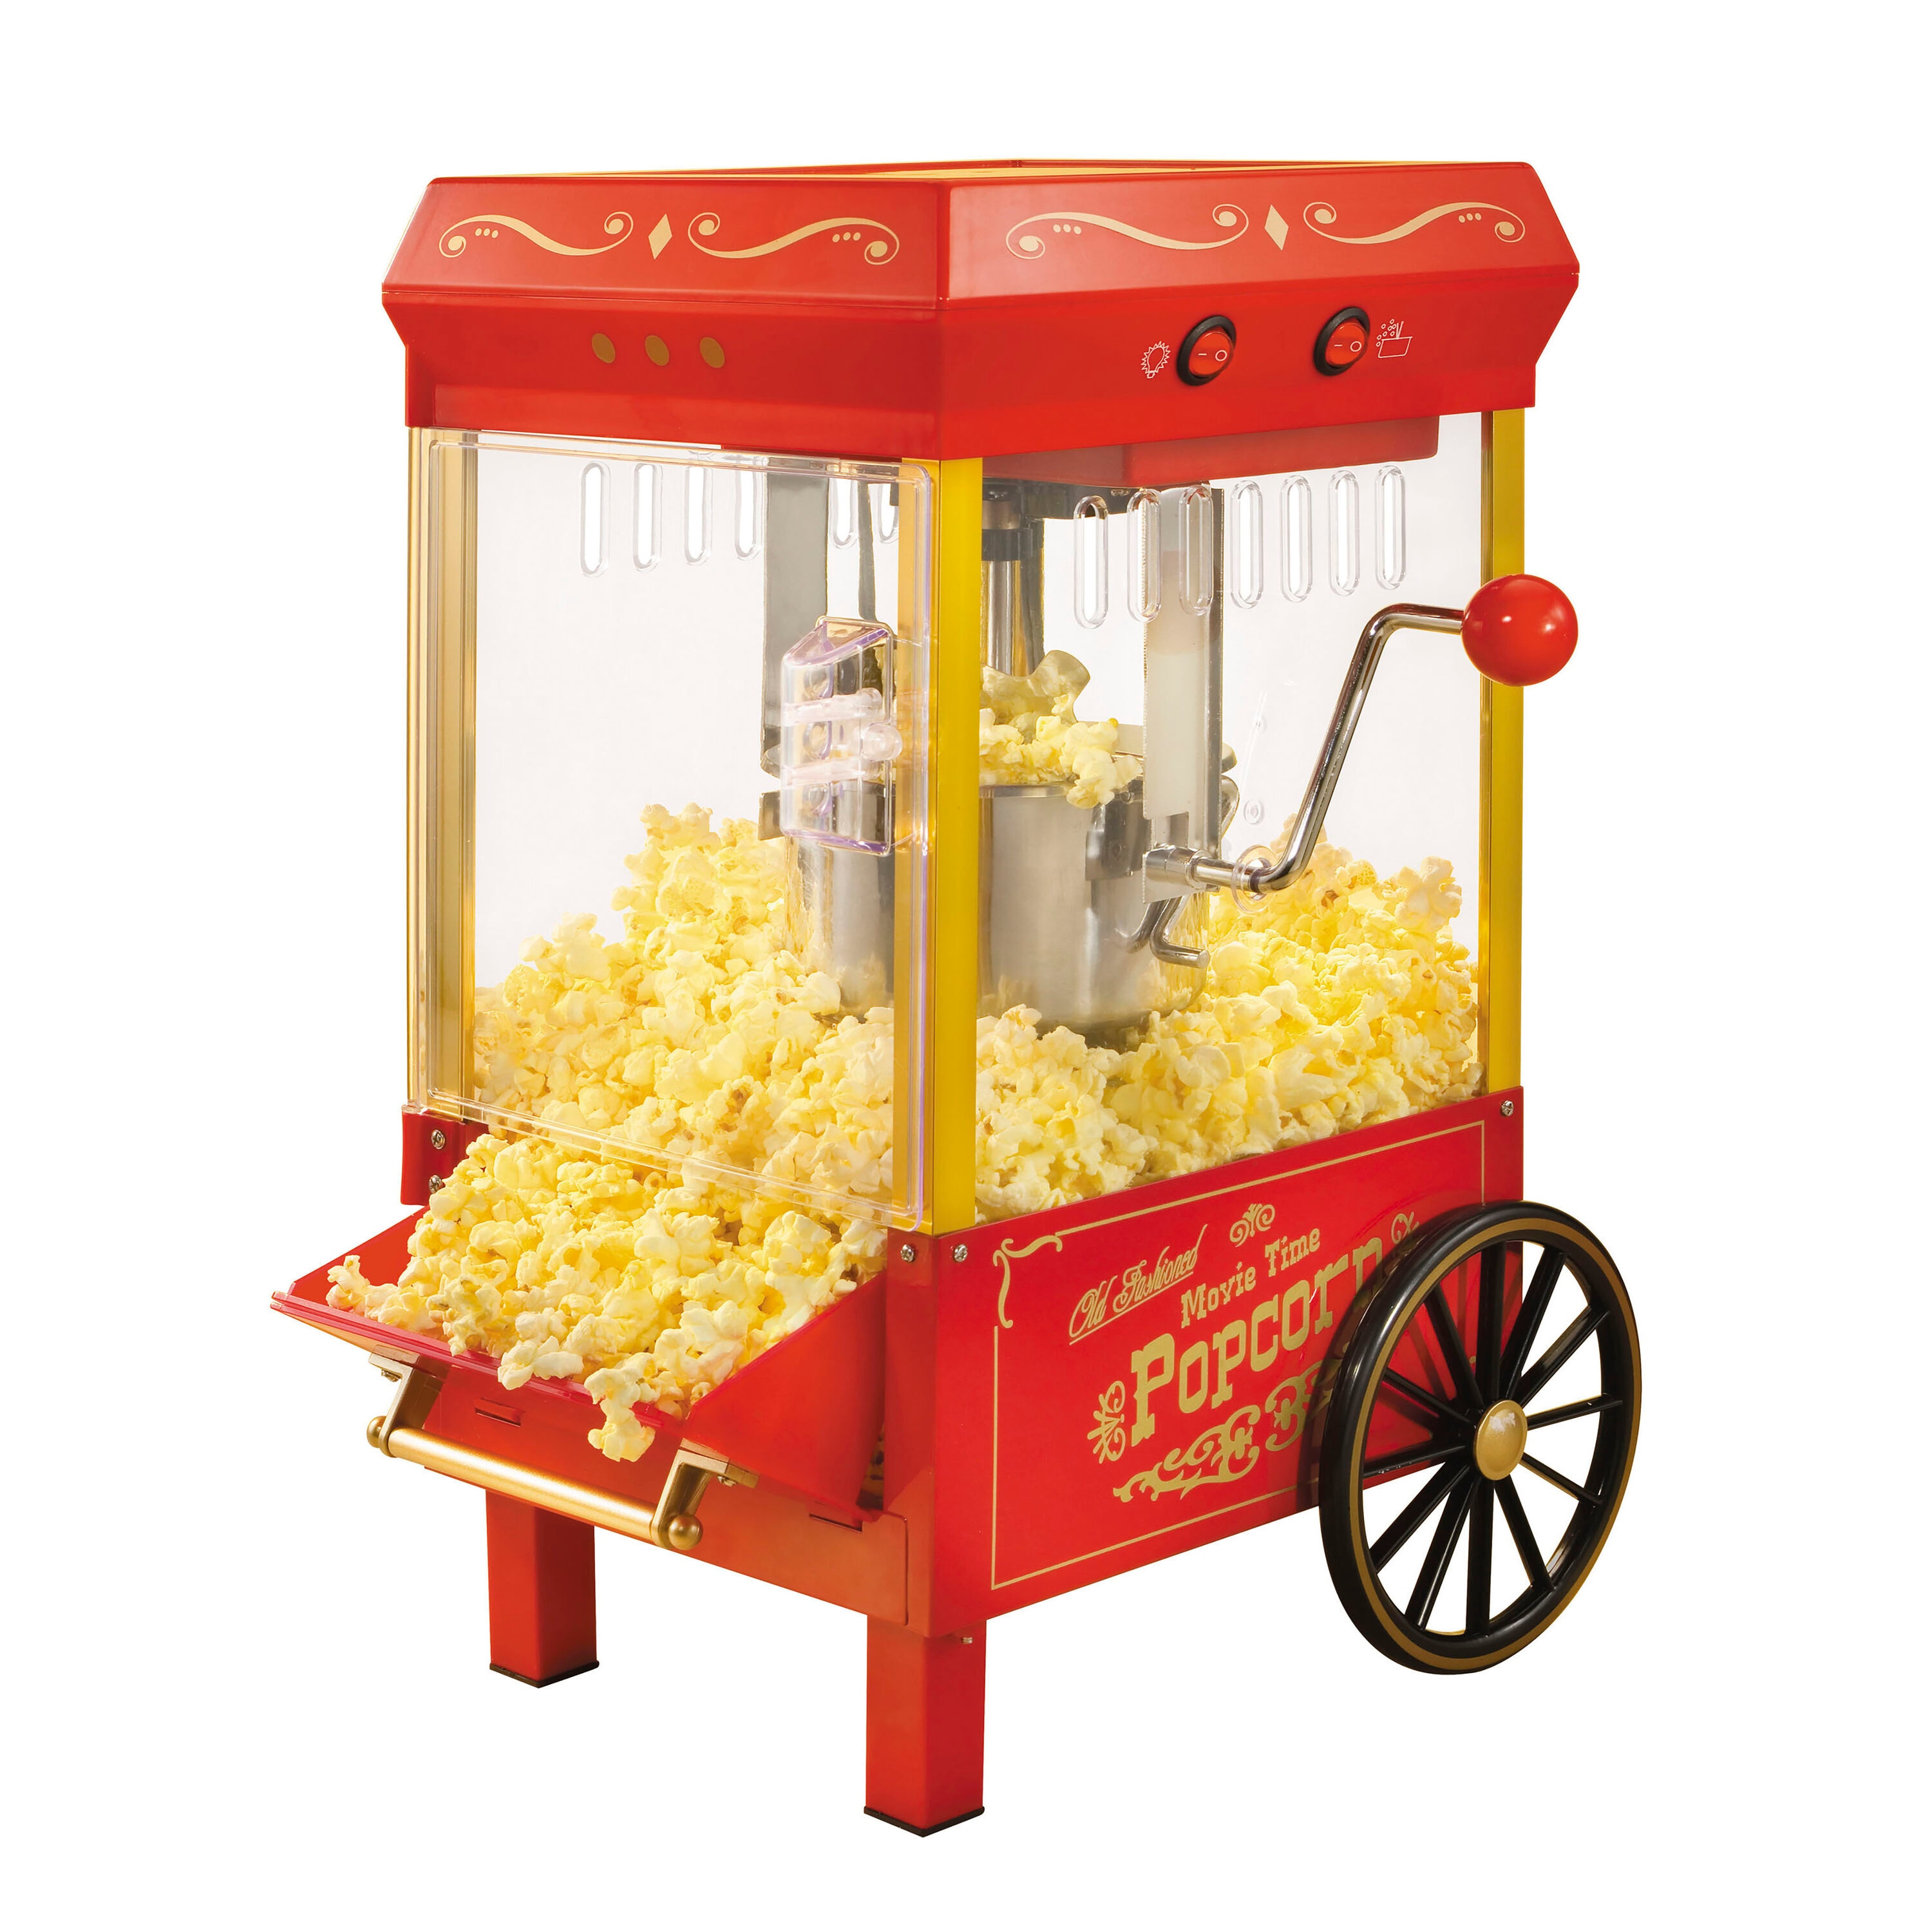 Nostalgia Electrics Retro Hot Air Popcorn Maker - Red, 1 ct - Kroger